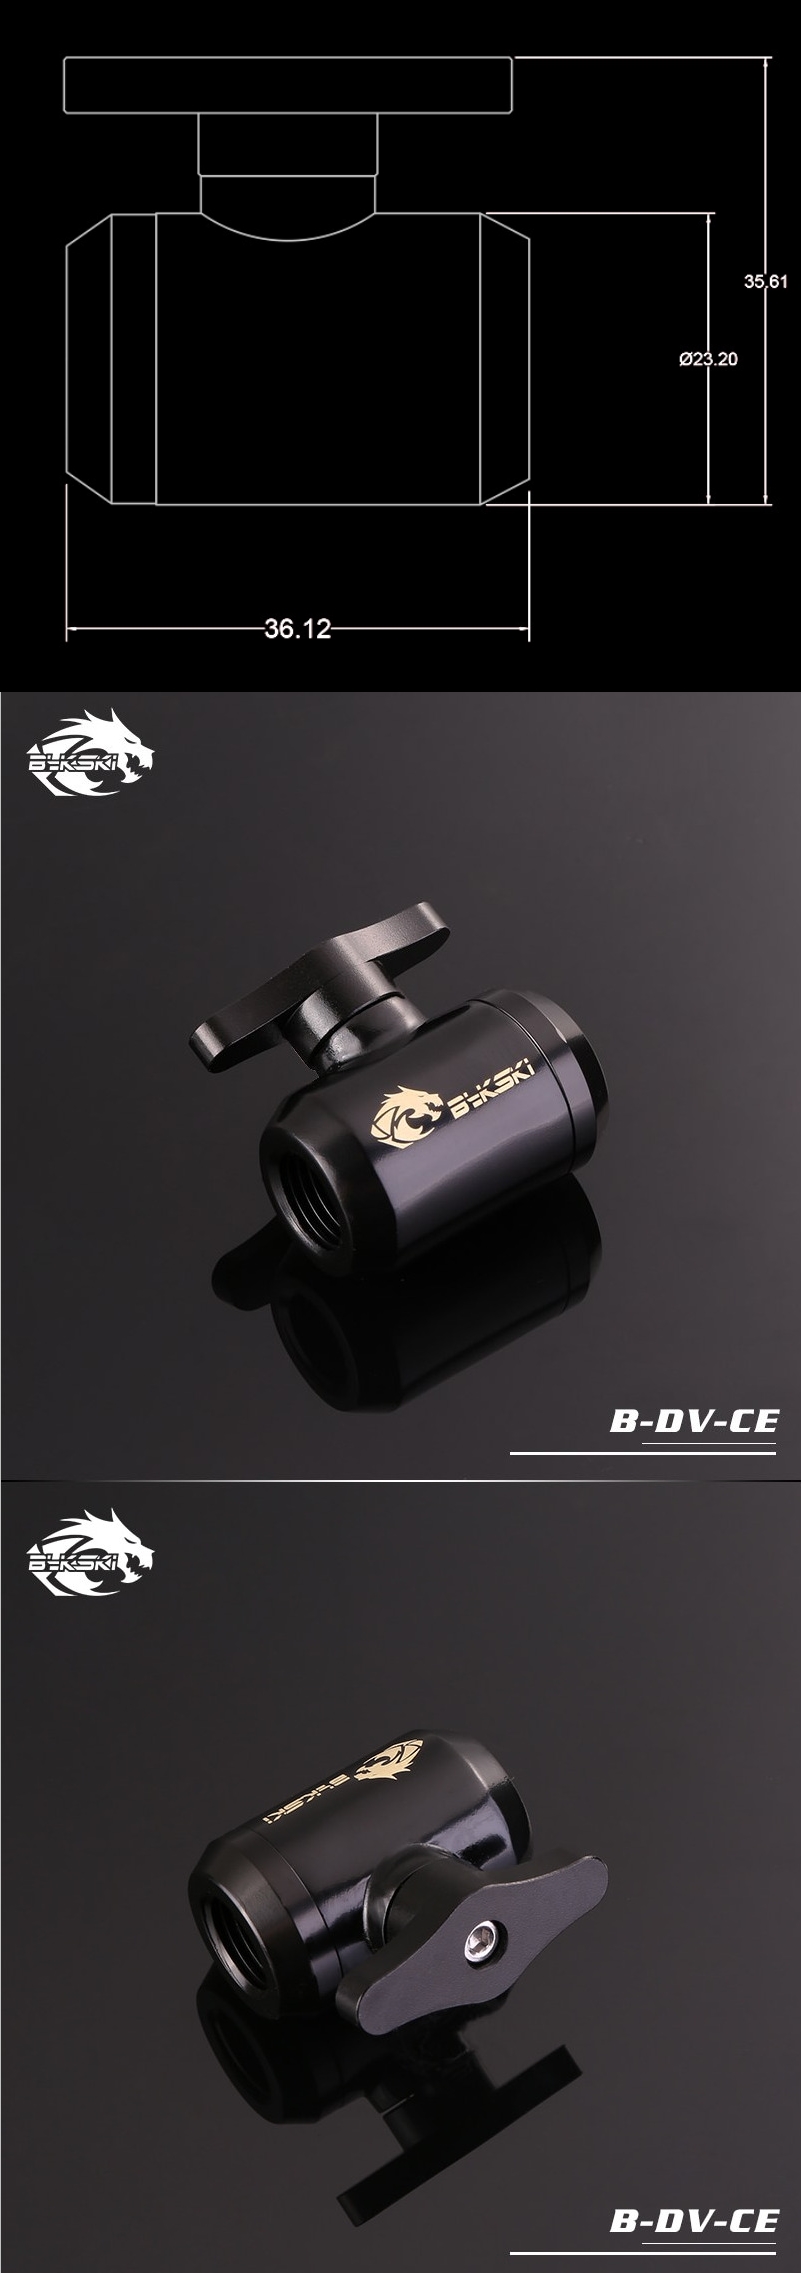 A large marketing image providing additional information about the product Bykski G1/4 Ball Valve - Matte Black - Additional alt info not provided